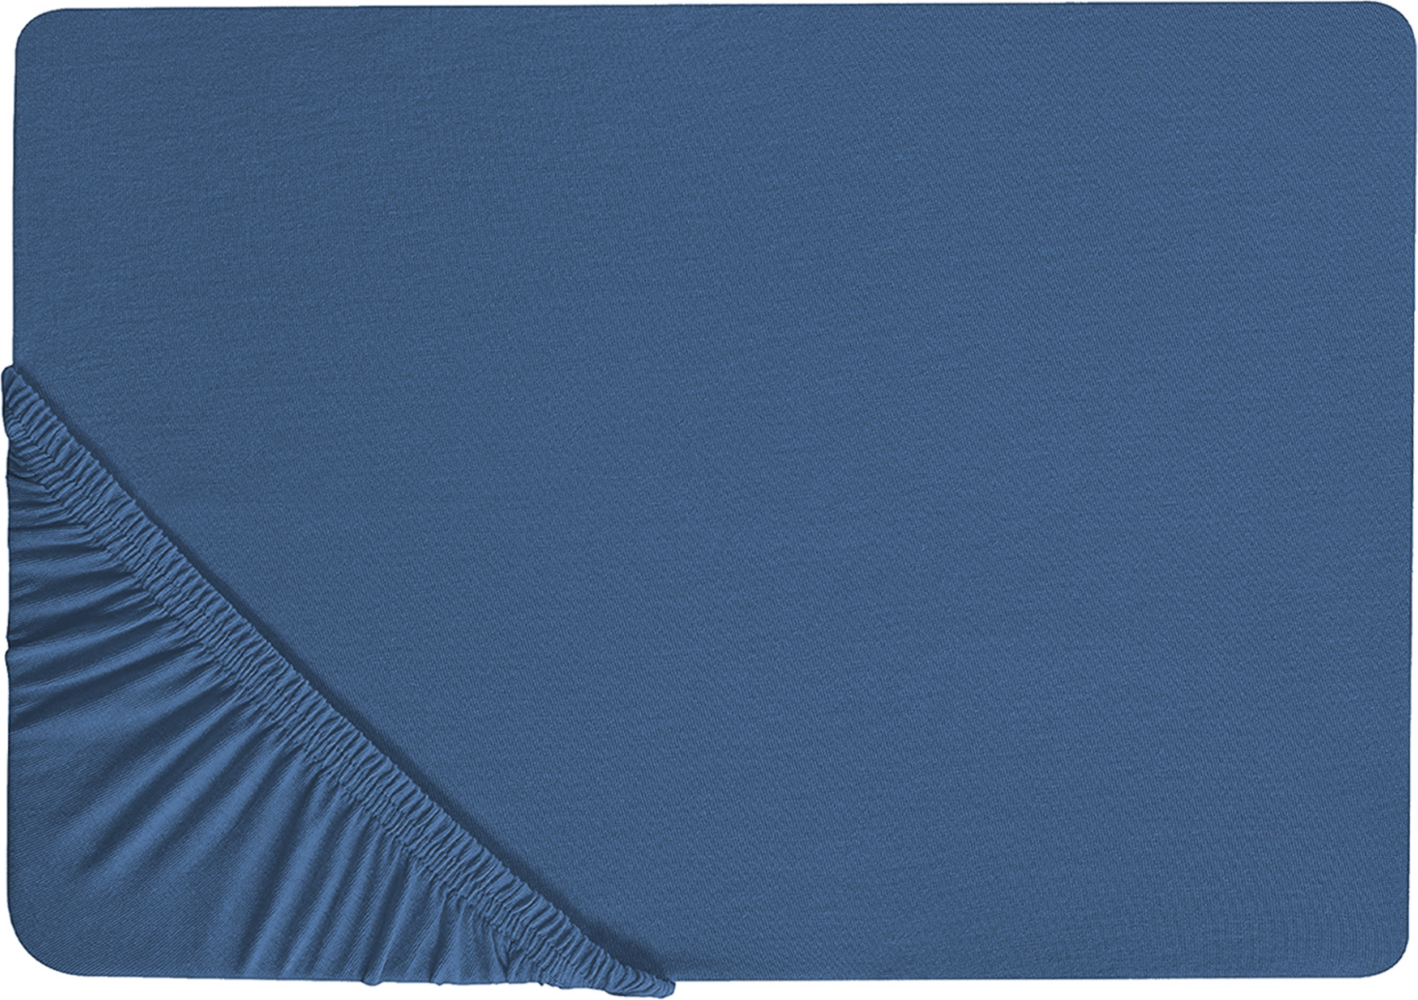 Spannbettlaken Baumwolle marineblau 160 x 200 cm JANBU Bild 1